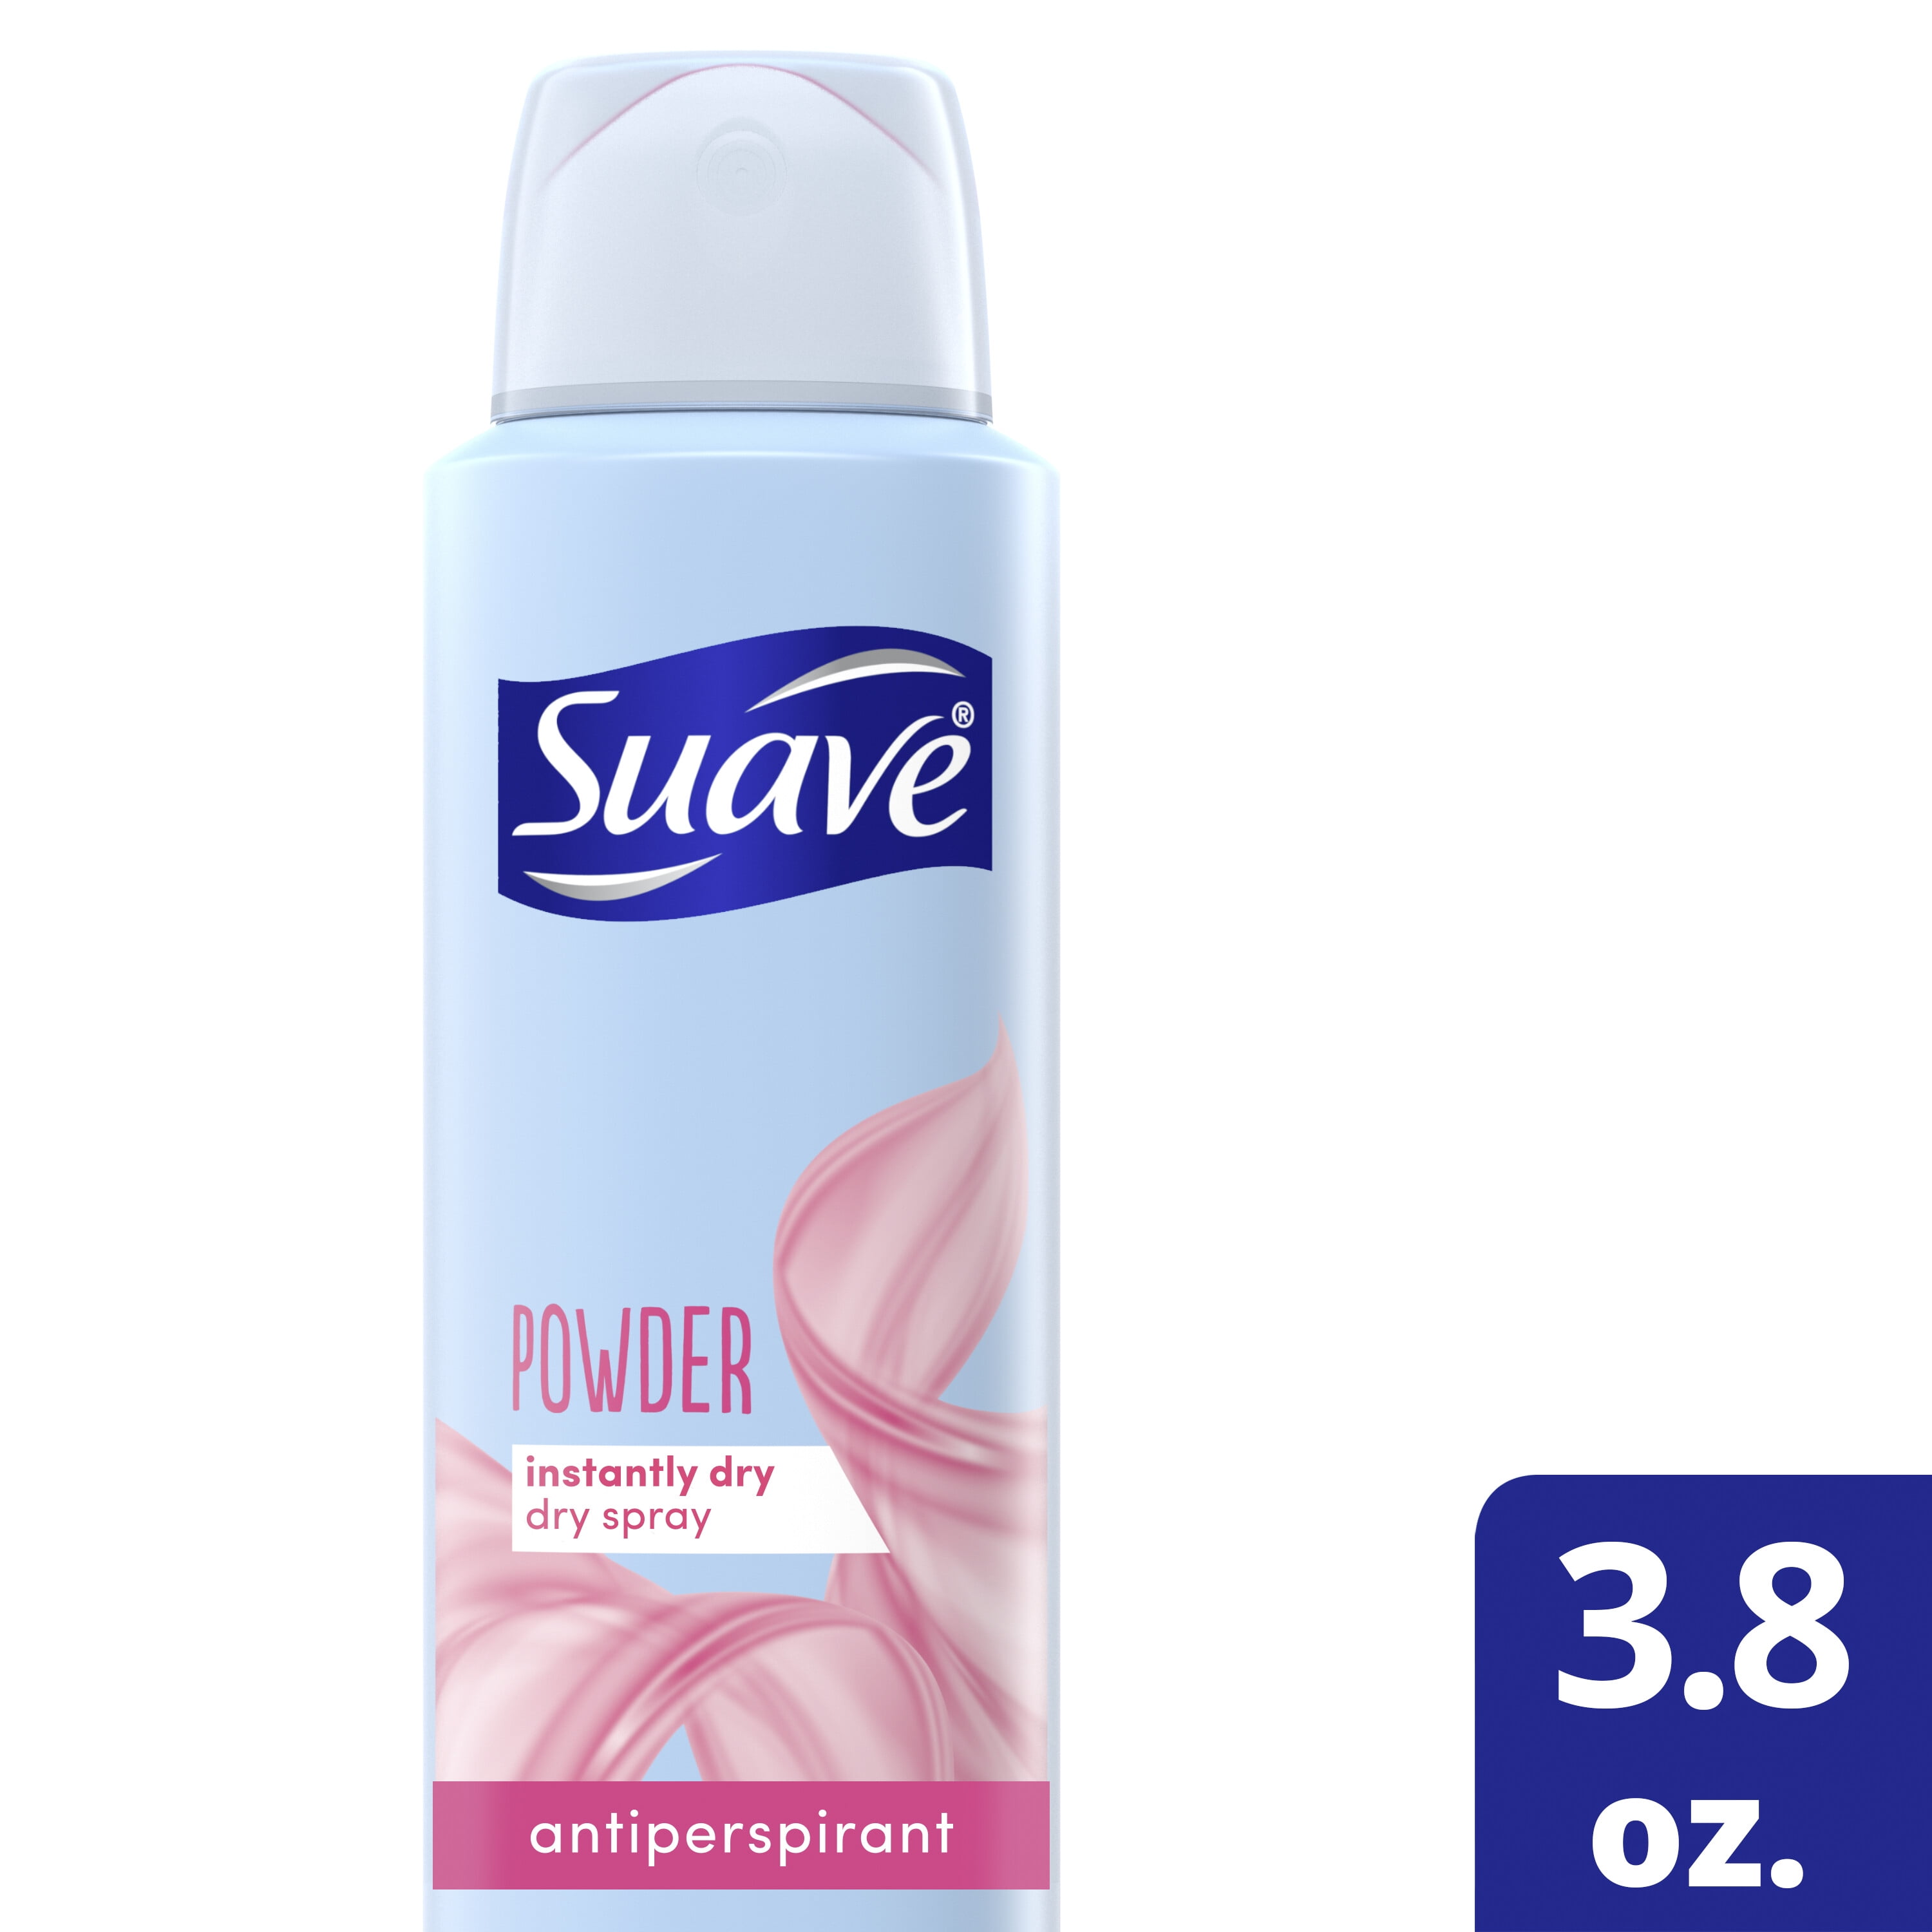 Suave Dry Spray Instantly Dry Powder Antiperspirant Deodorant 3.8 - Walmart.com